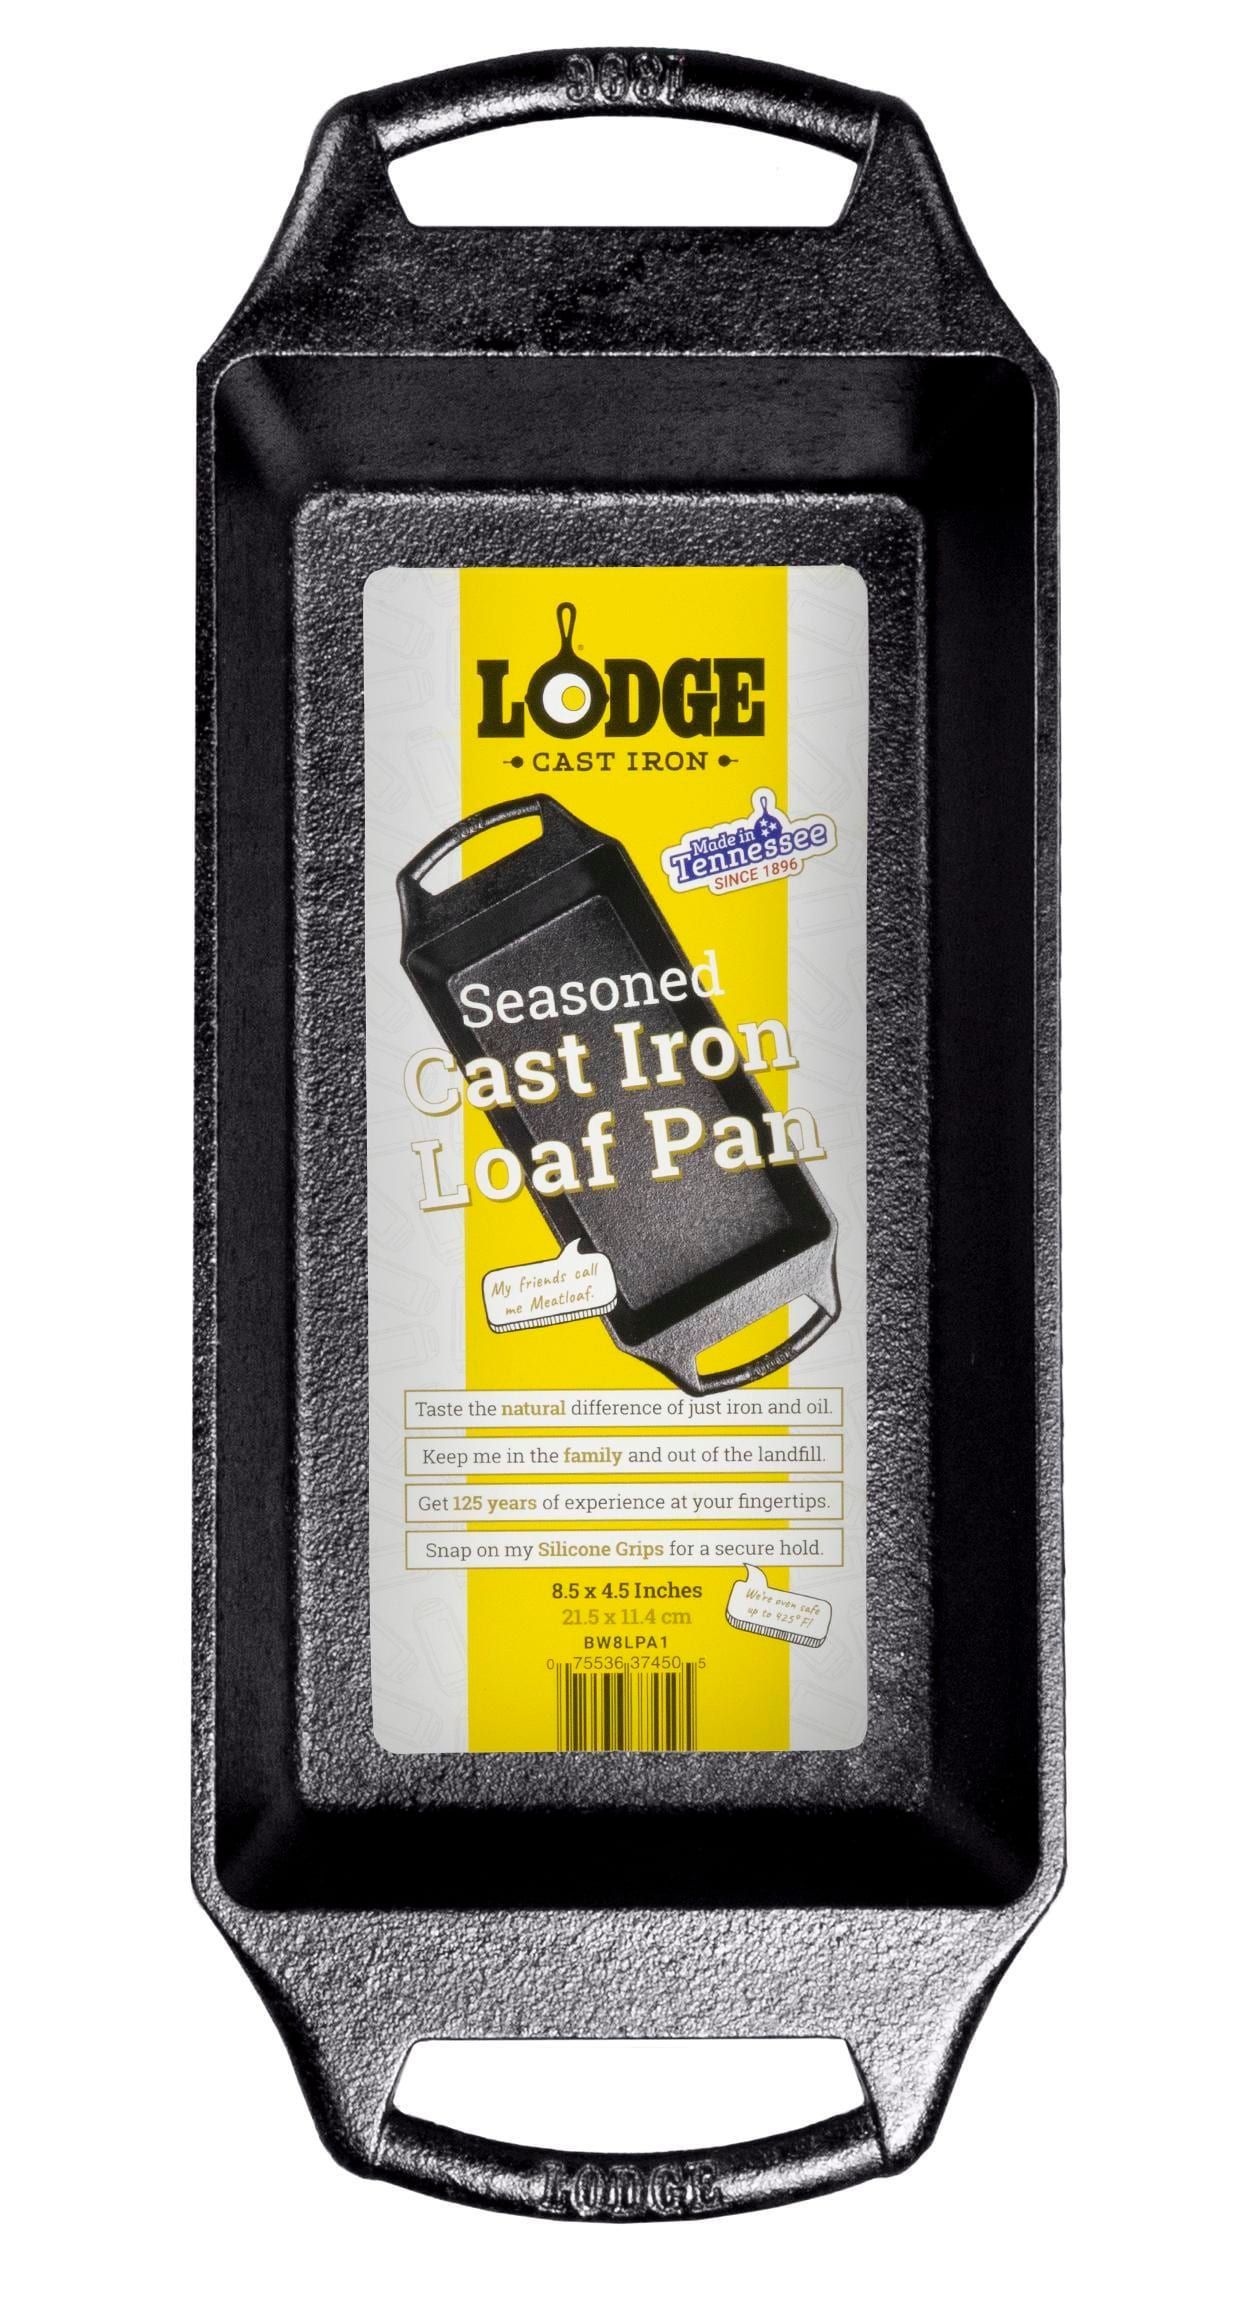 8.5 x 4.5 inch Seasoned Cast Iron Loaf Pan